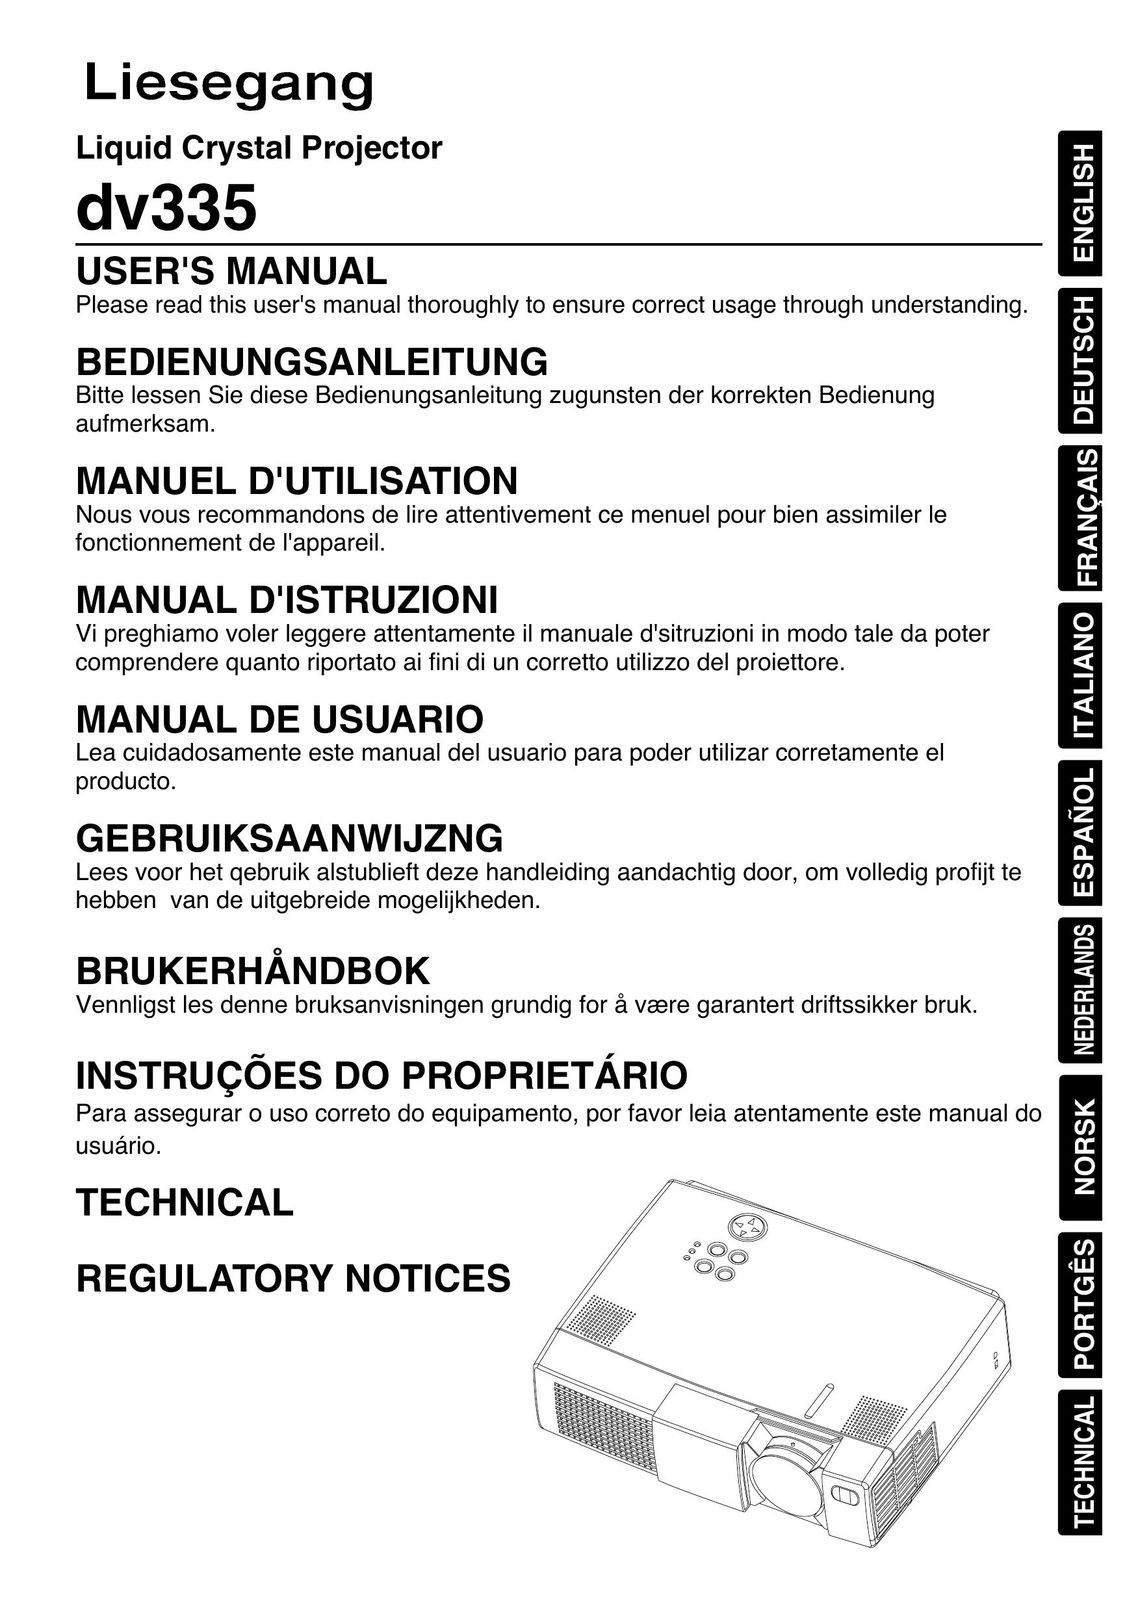 Liesegang dv335 Projector User Manual